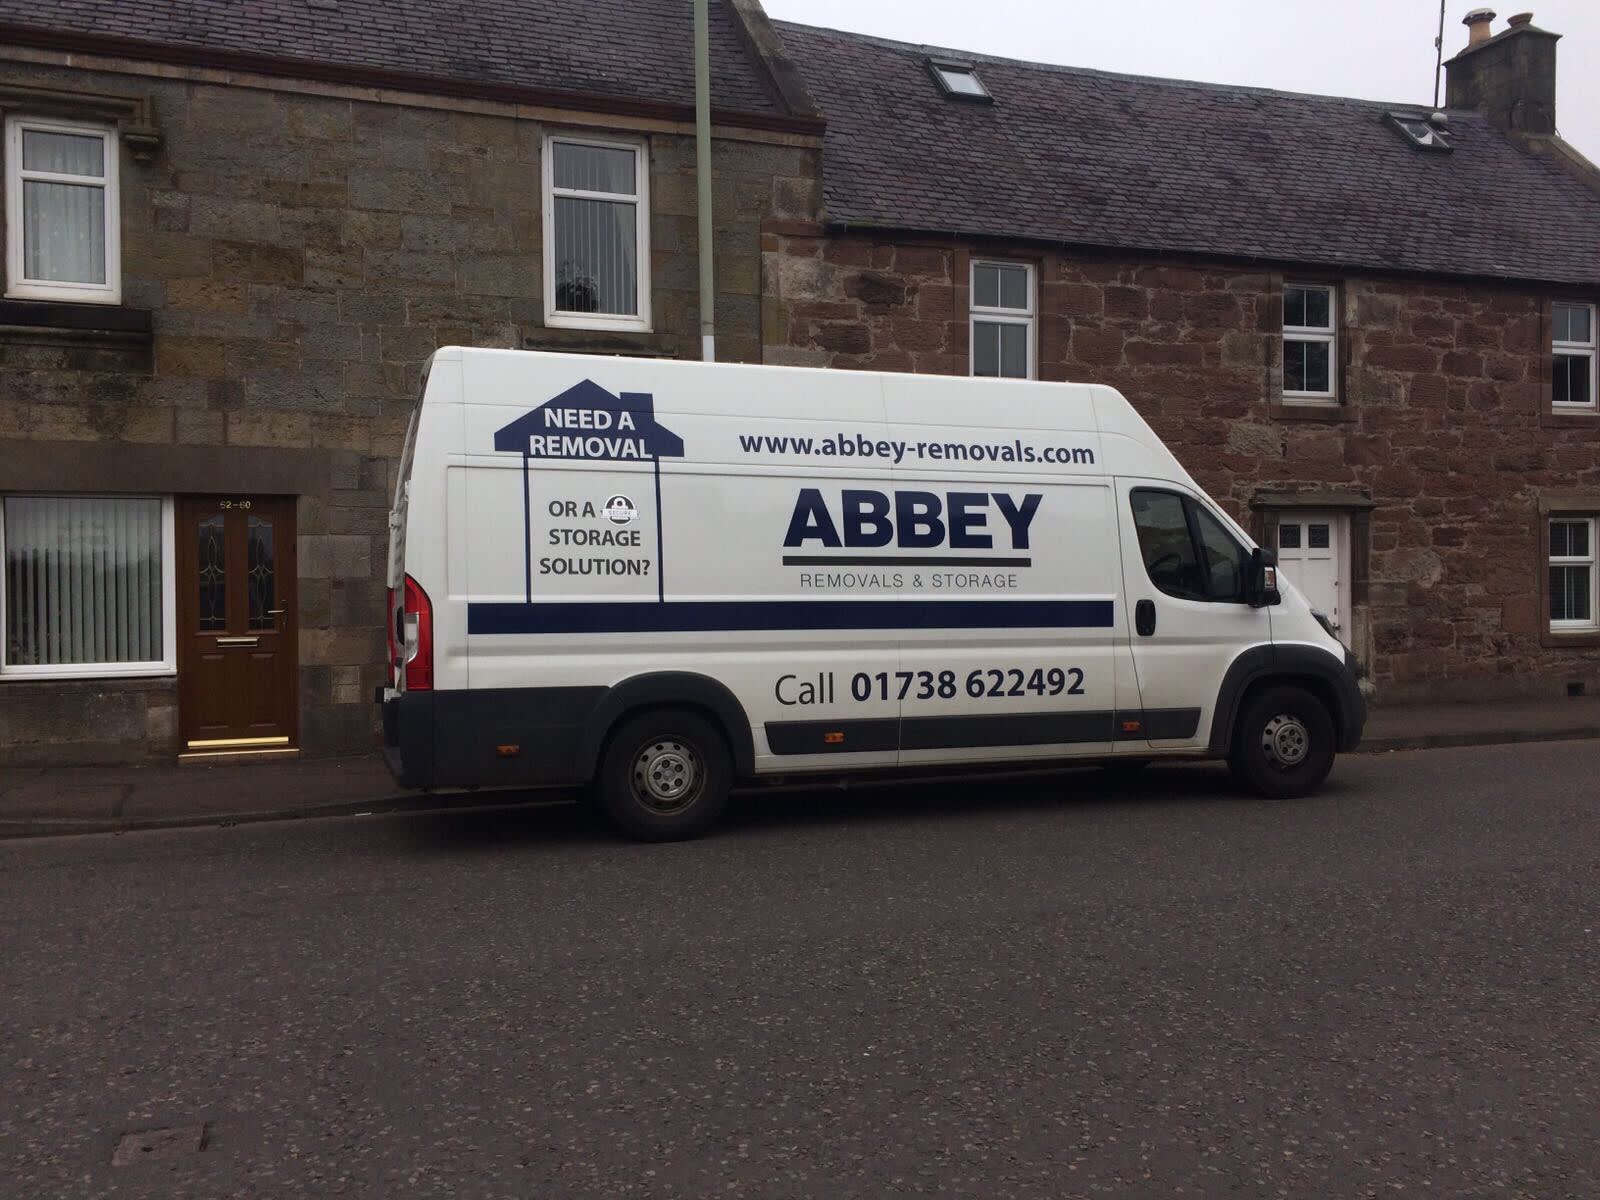 Abbey Removals & Storage (perth) Ltd Perth 01738 622492